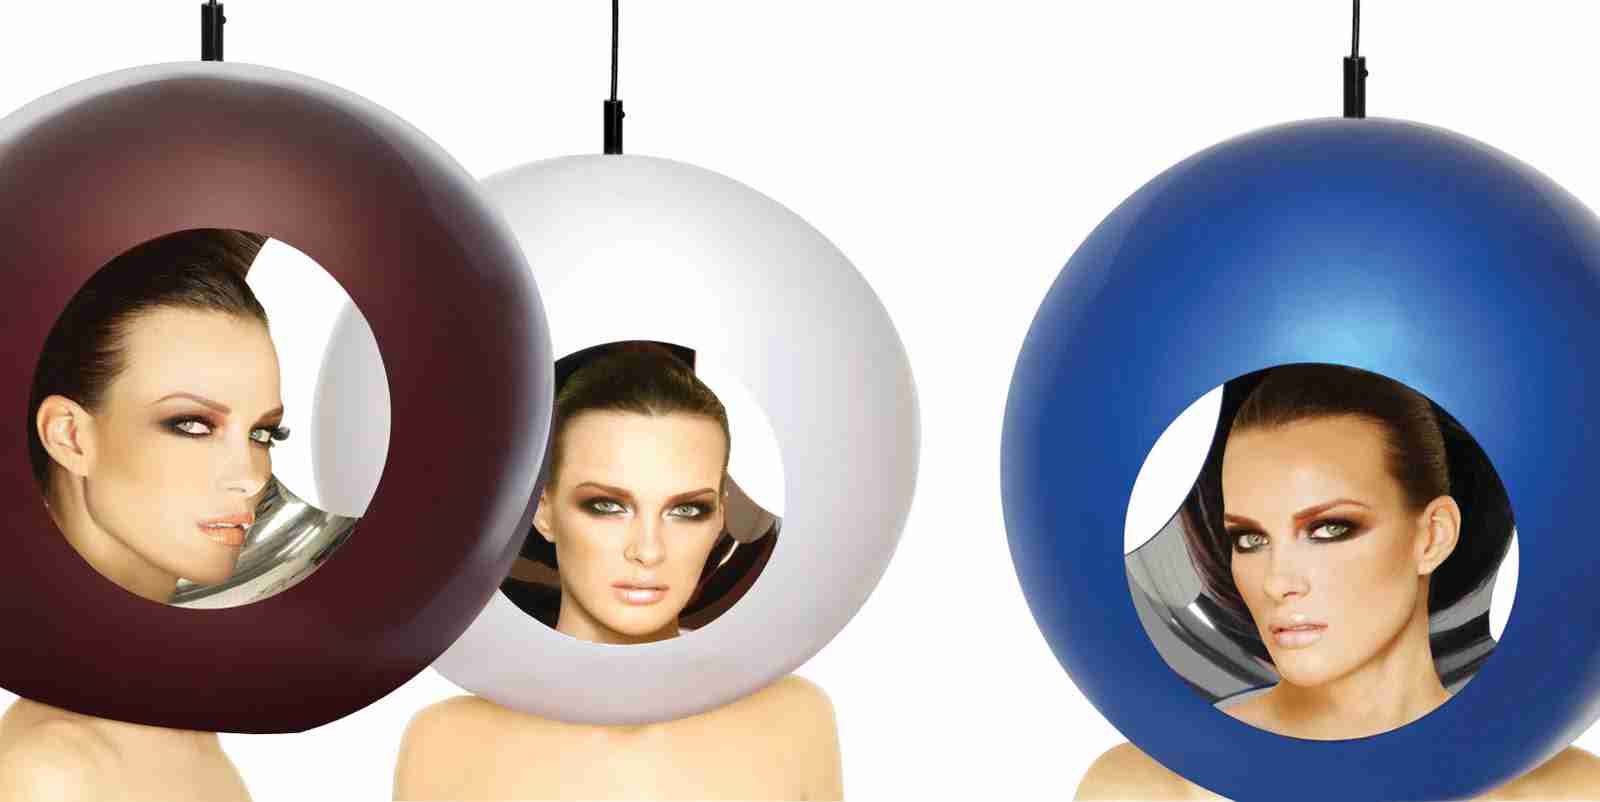 Simple design popular white mental ball pendant light with holes